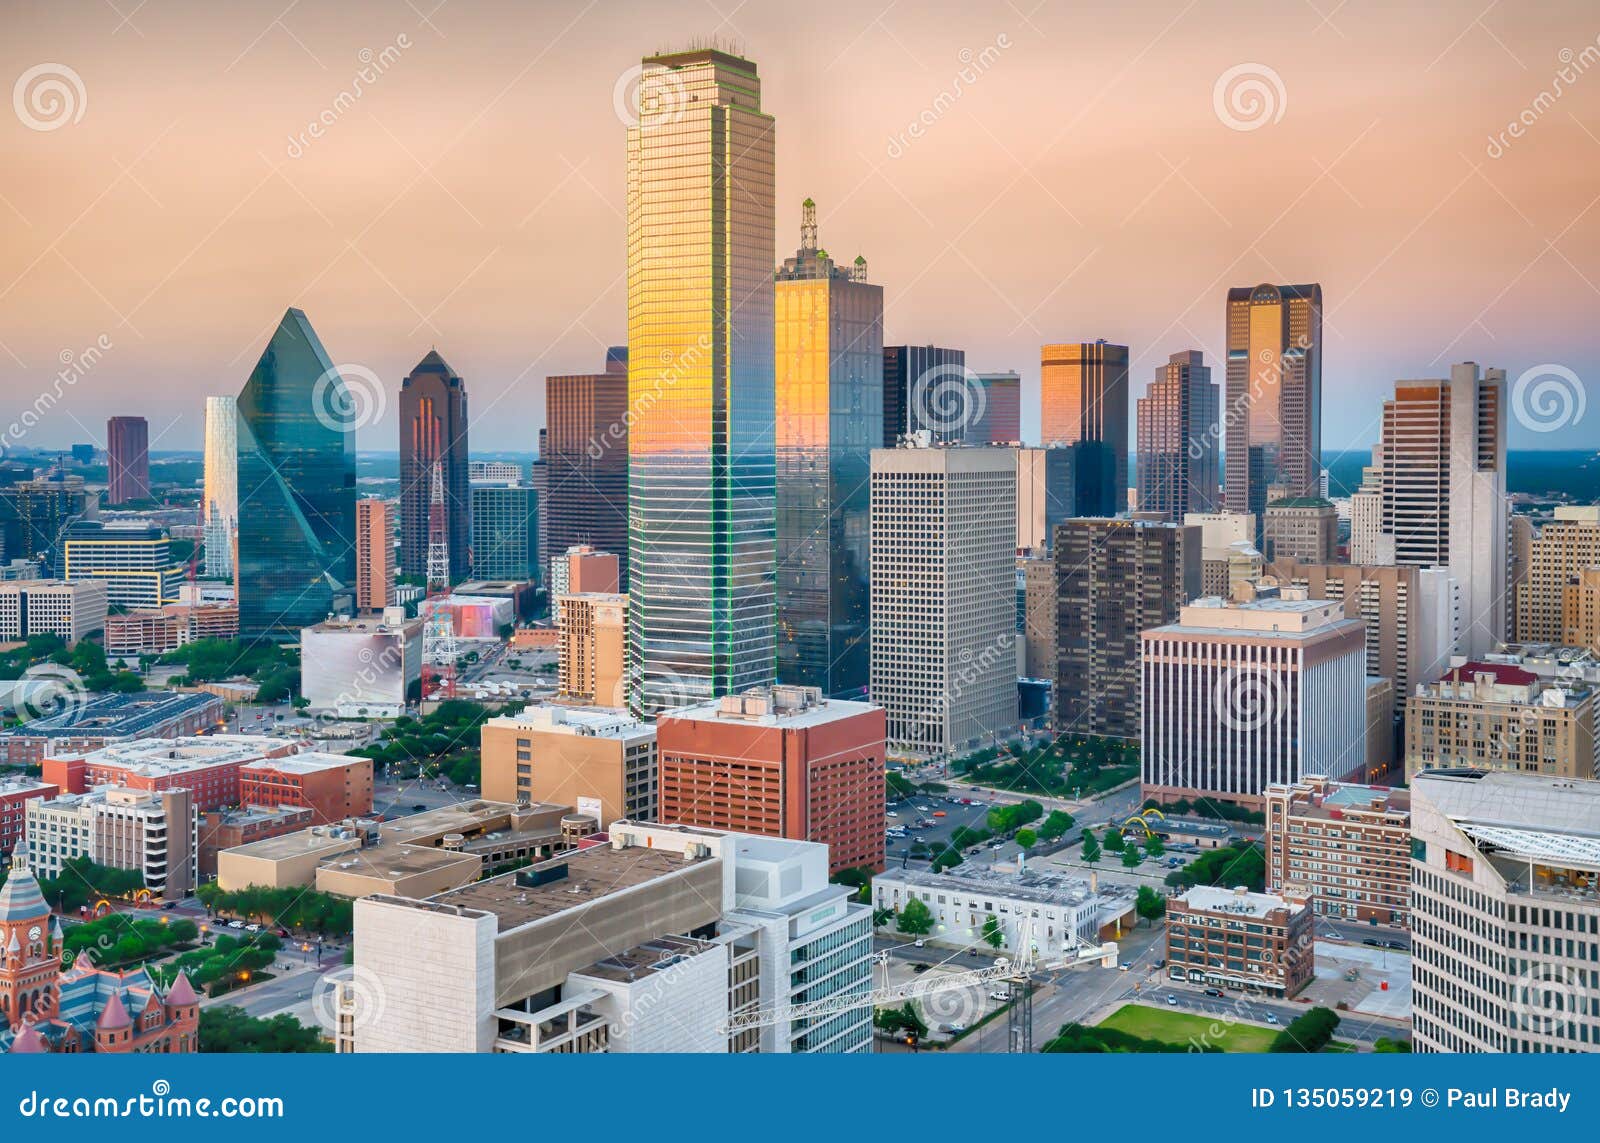 Dallas City Skyline Sunset stock image. Image of travel - 135059219